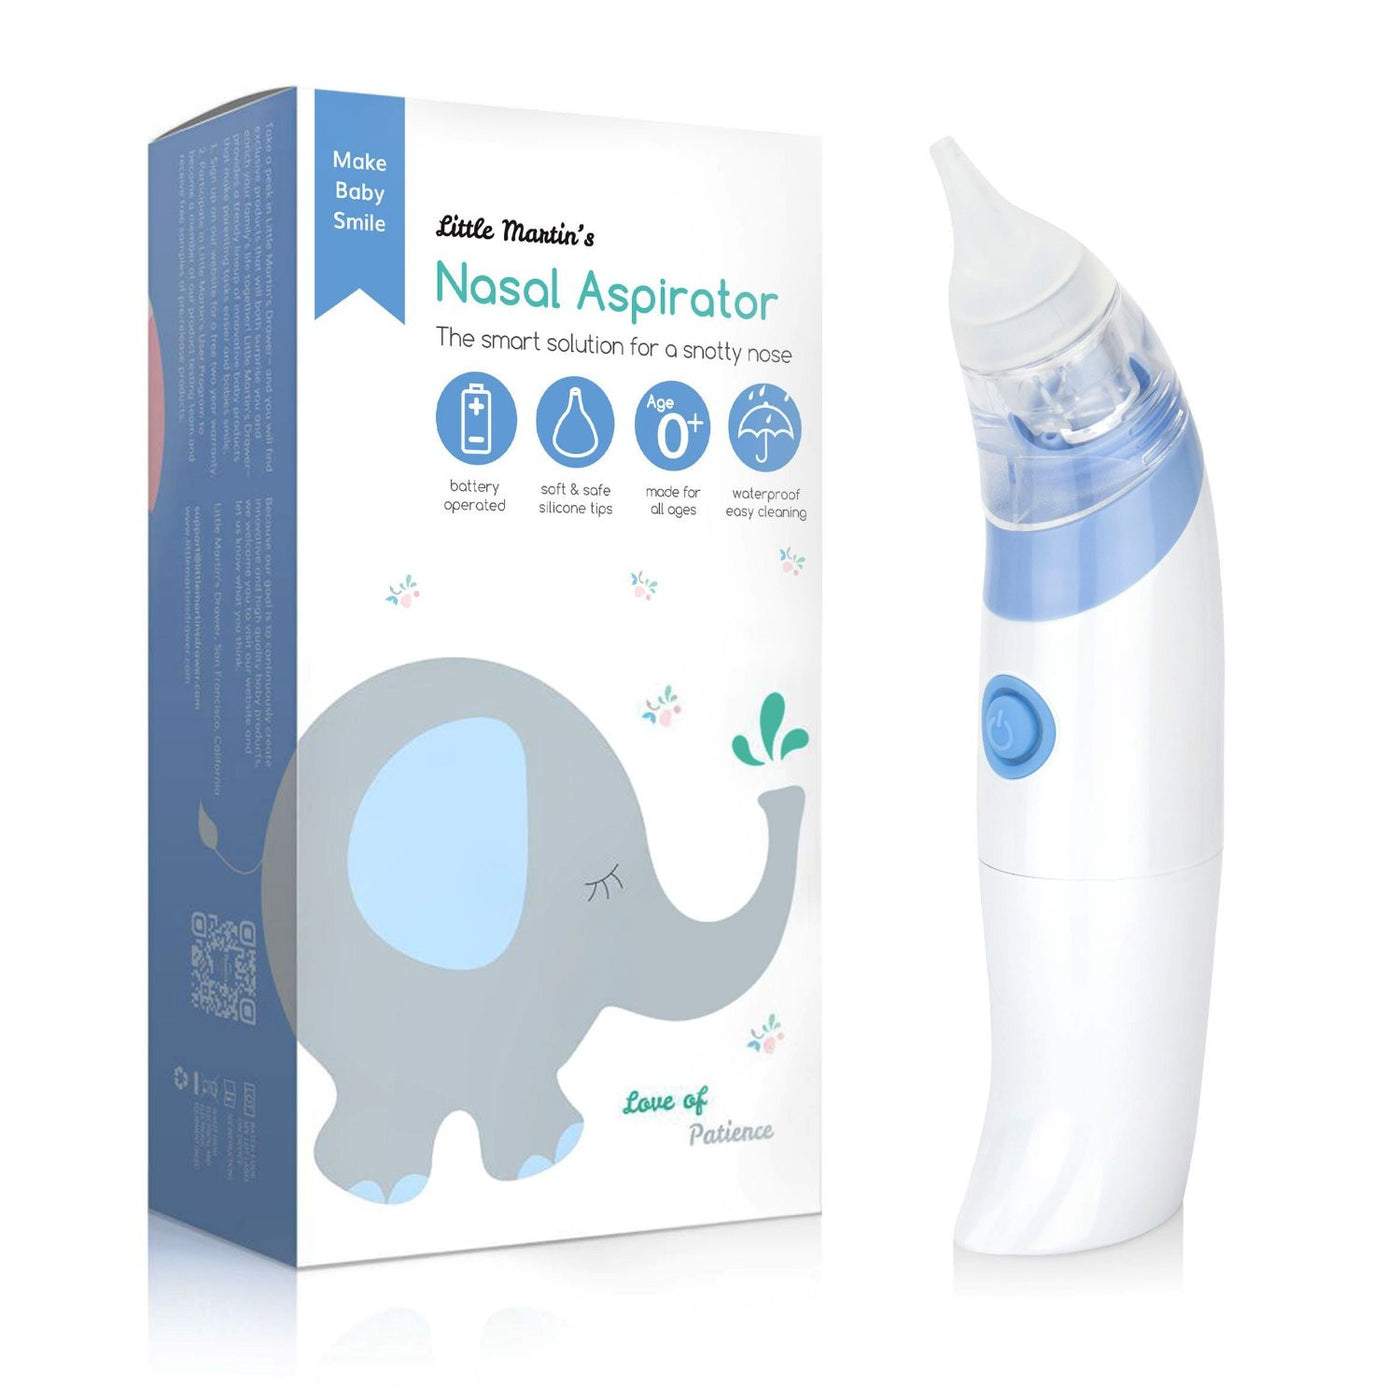 Baby Battery Nasal Aspirator